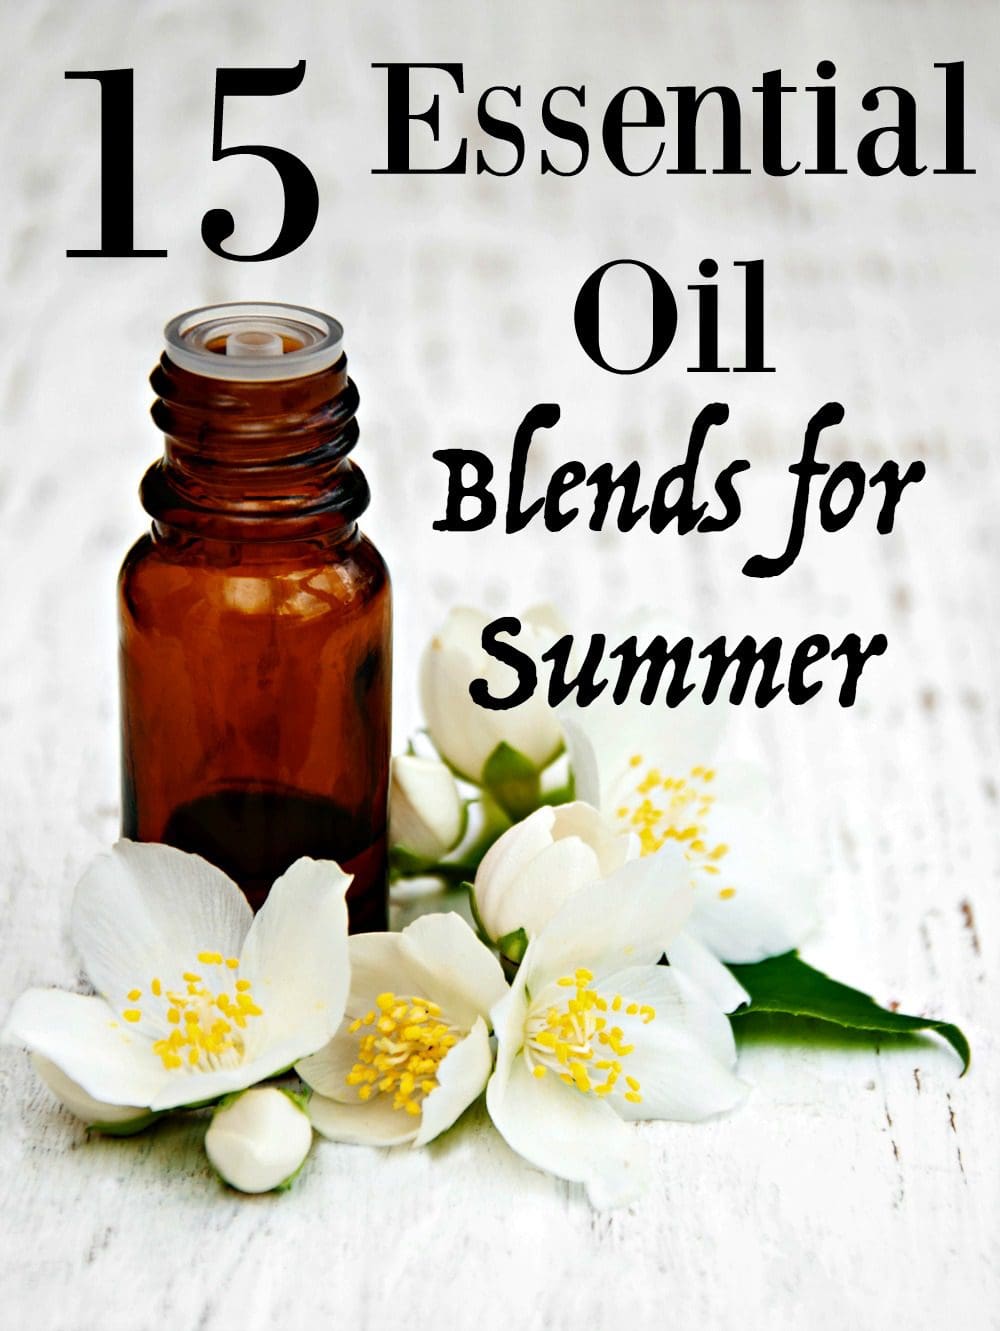 15 Essentials Oil Blends for Summer